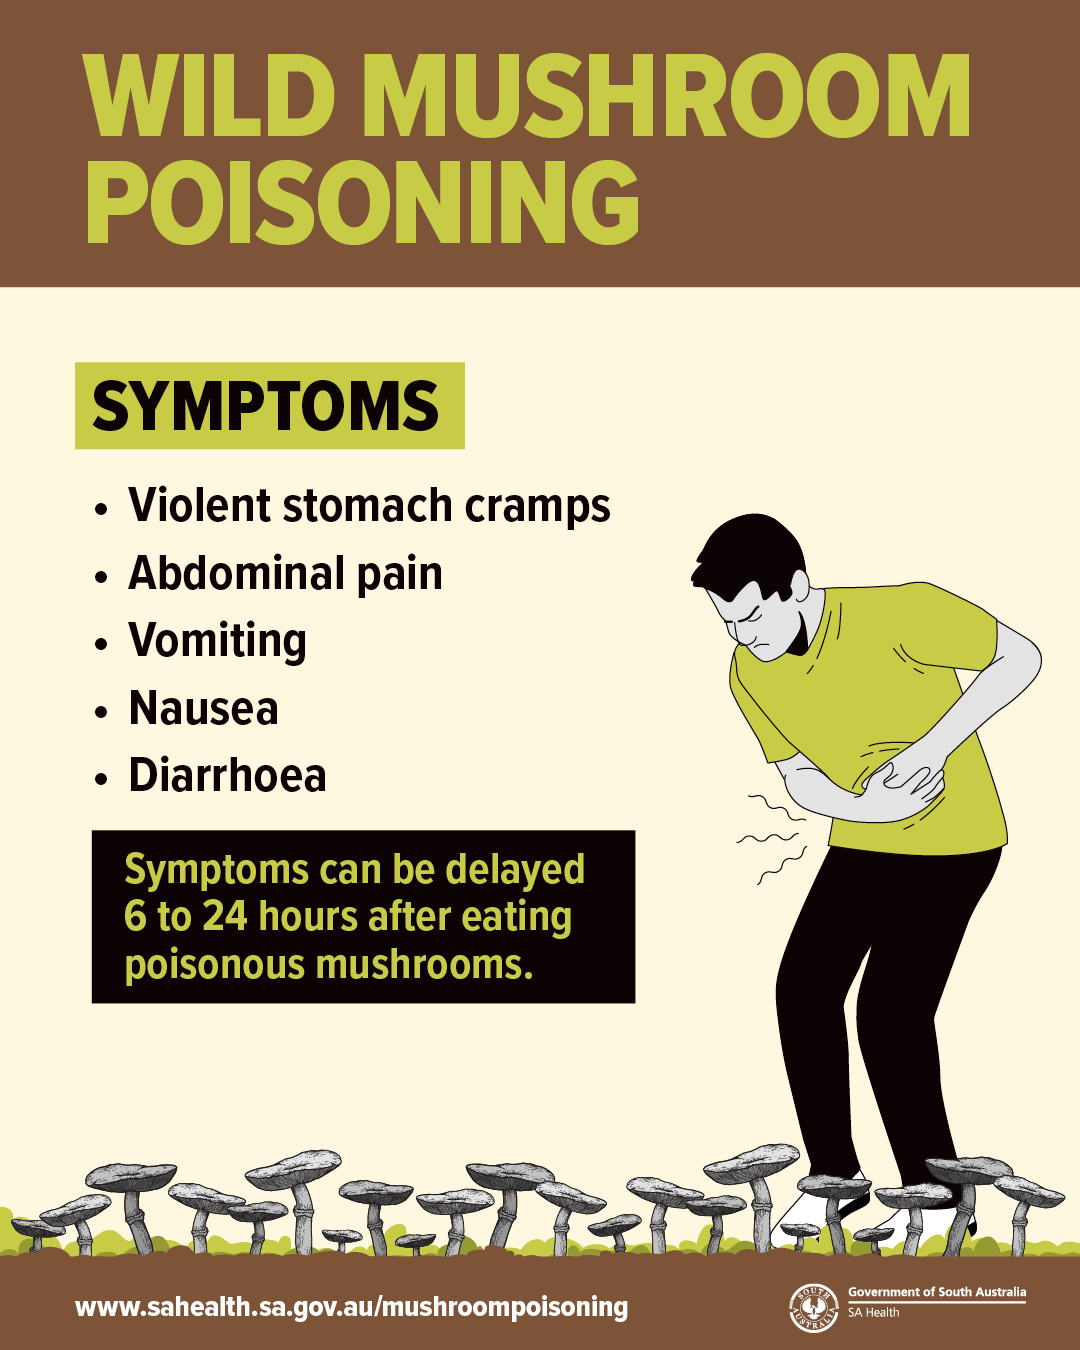 Image of wild mushroom poisoning and symptoms